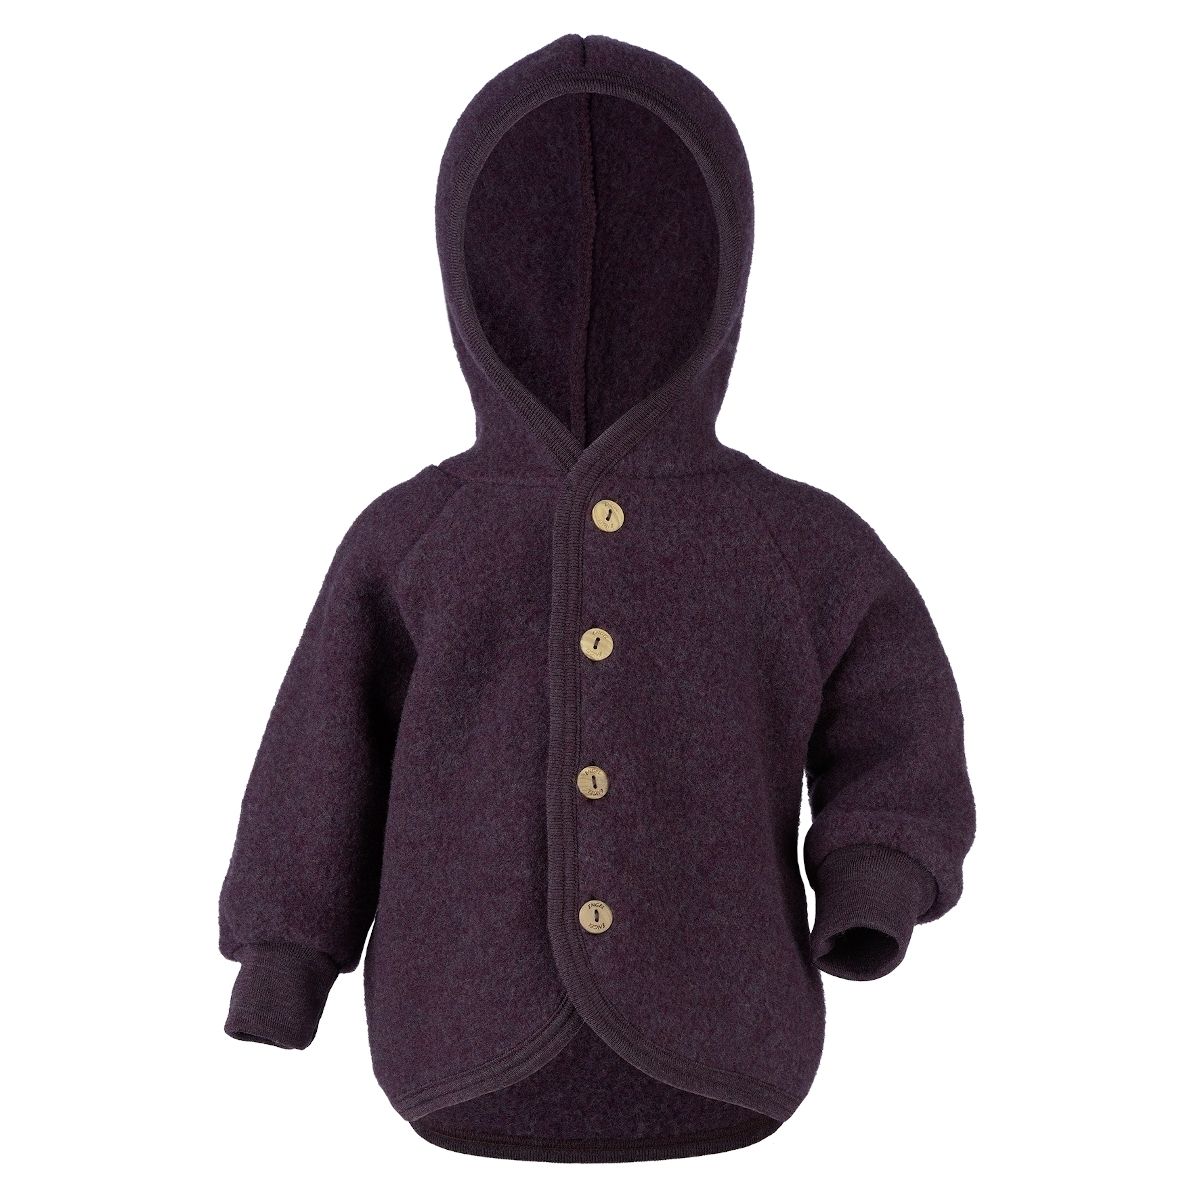 ENGEL Natur Hooded jacket with wooden buttons Purple melange